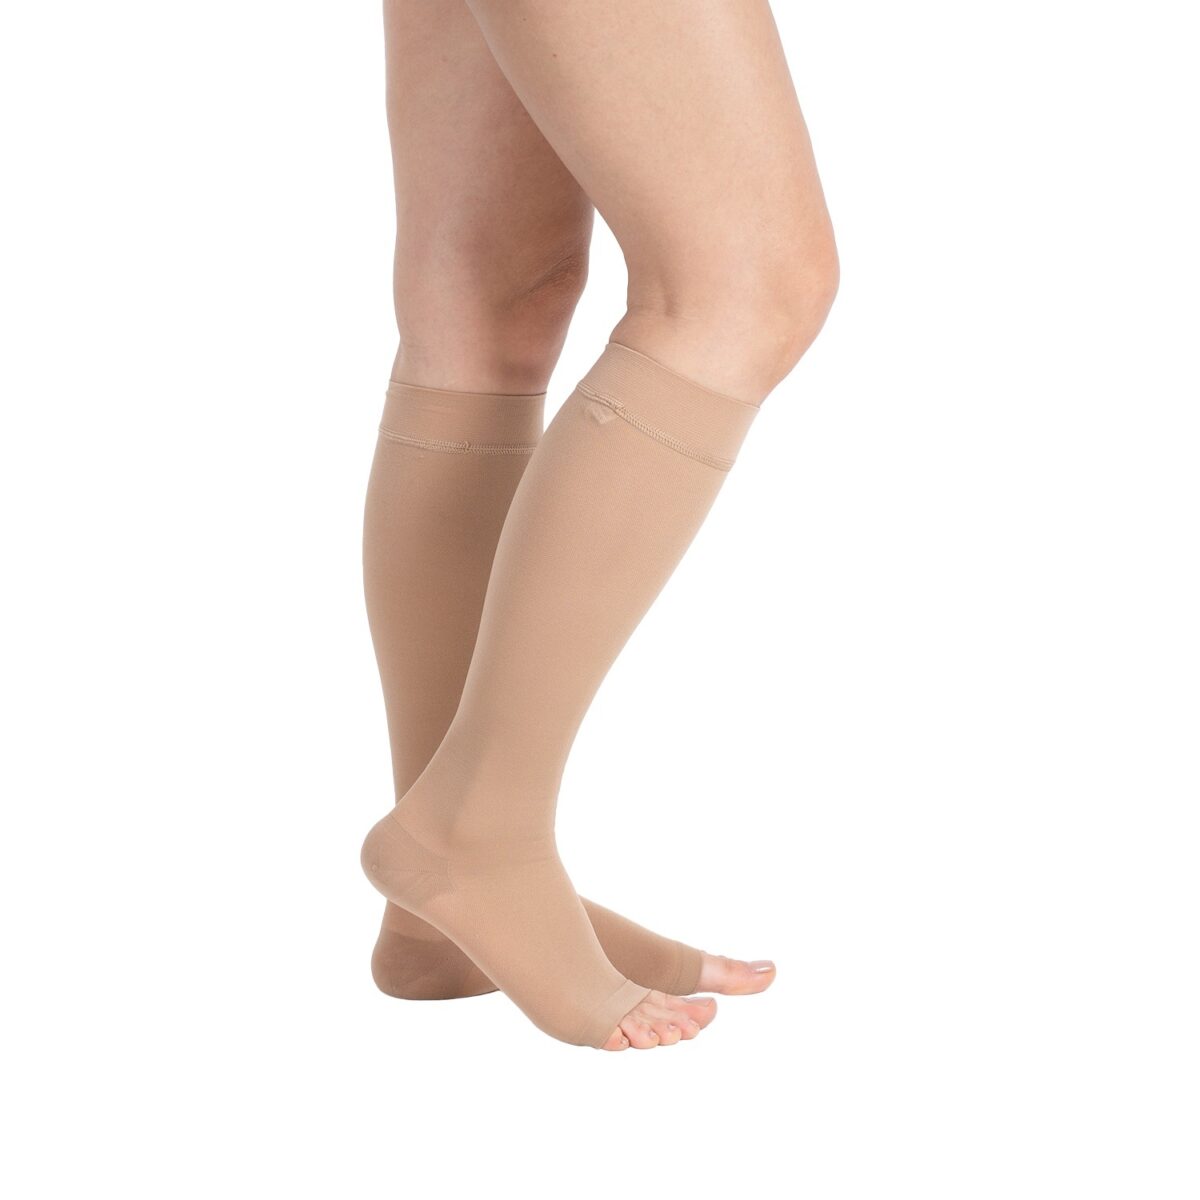 wingmed orthopedic equipments W1307 ccl2 knee high stockings open toe beige 79